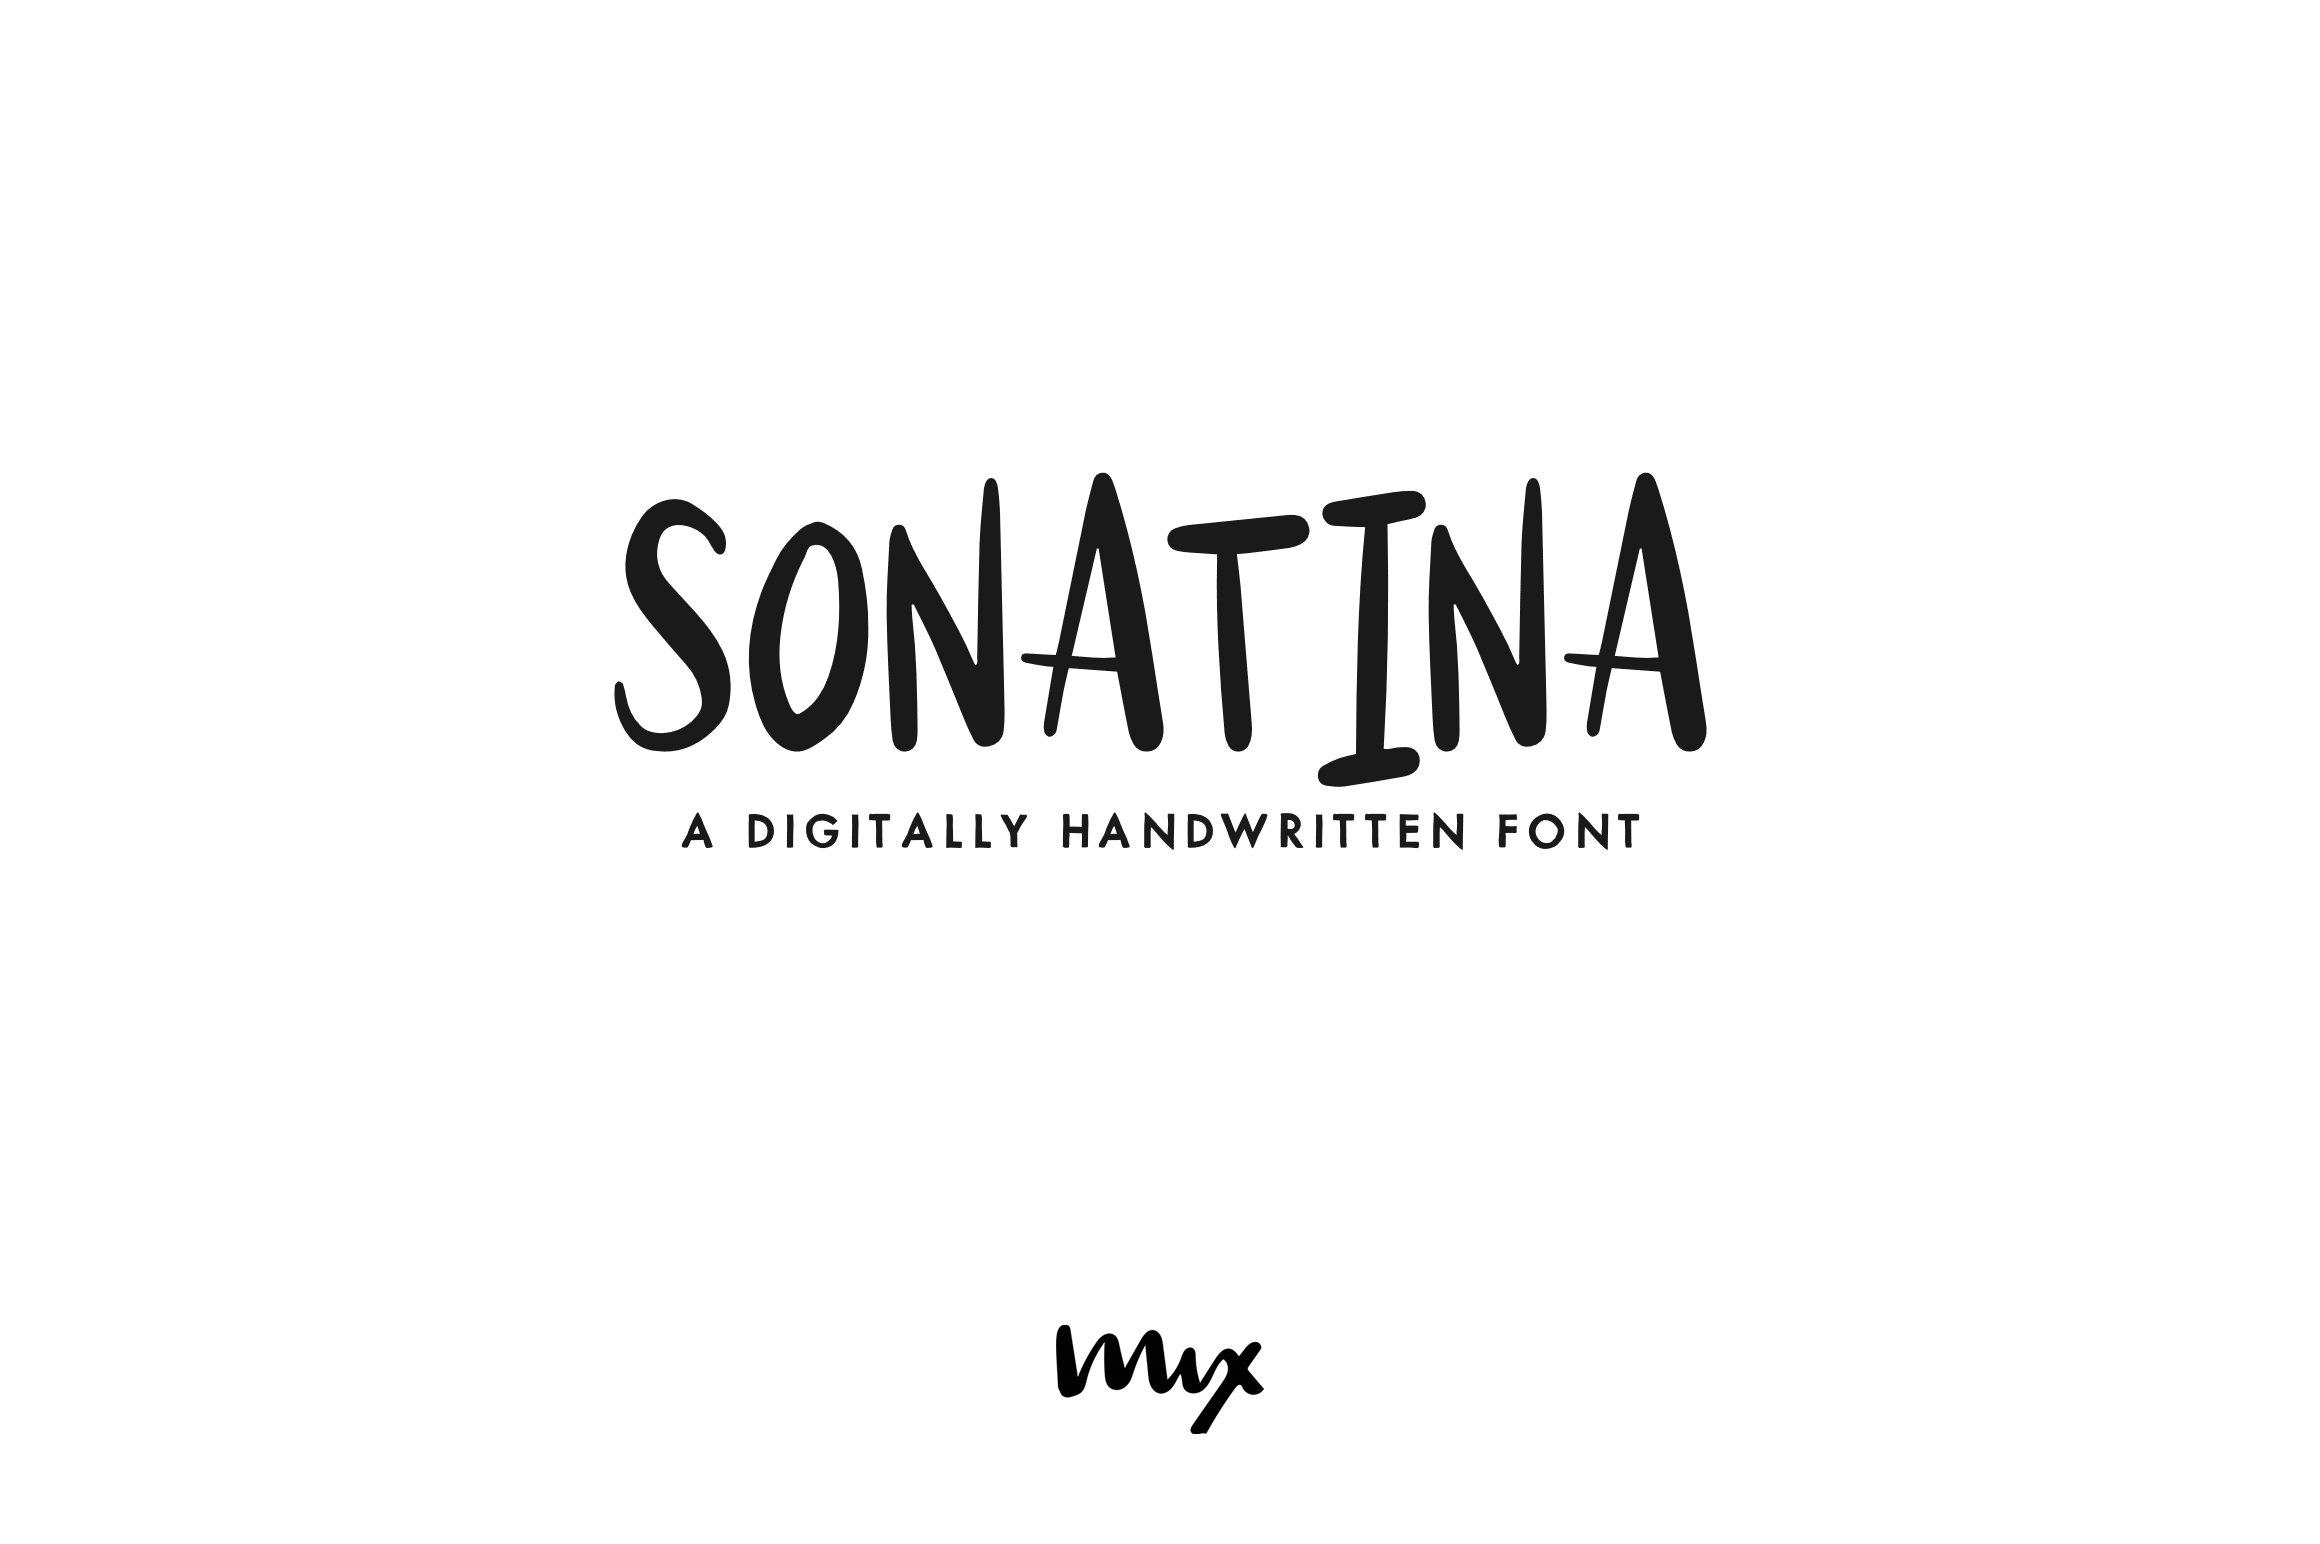 Sonatina — A Handwritten Font cover image.